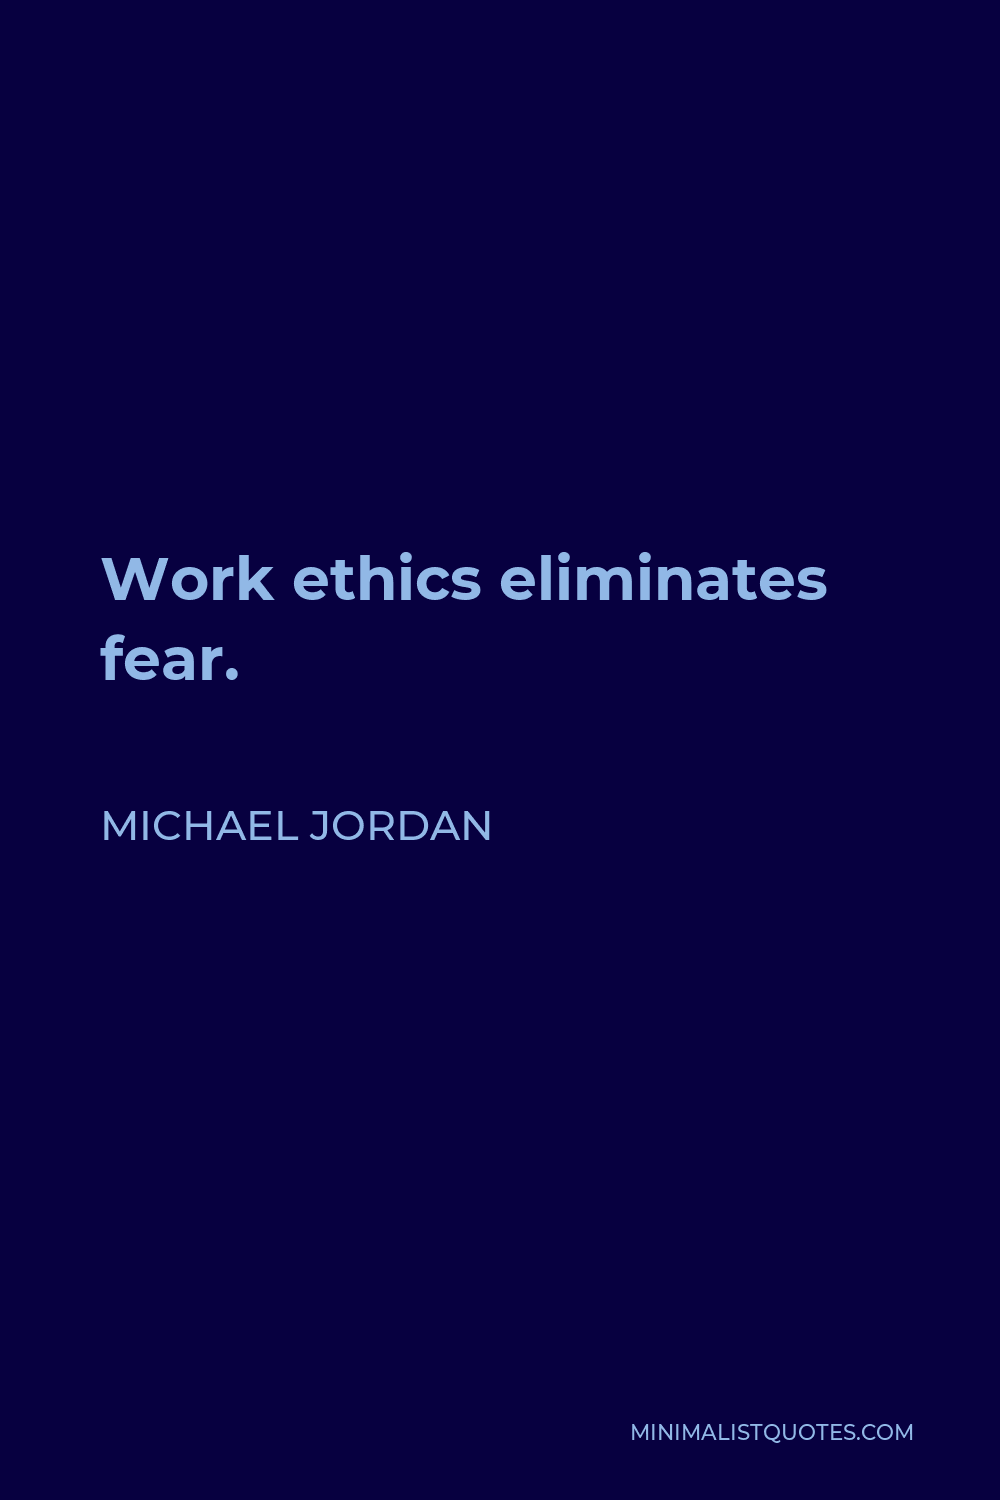 Michael Jordan Quote - Work ethics eliminates fear.